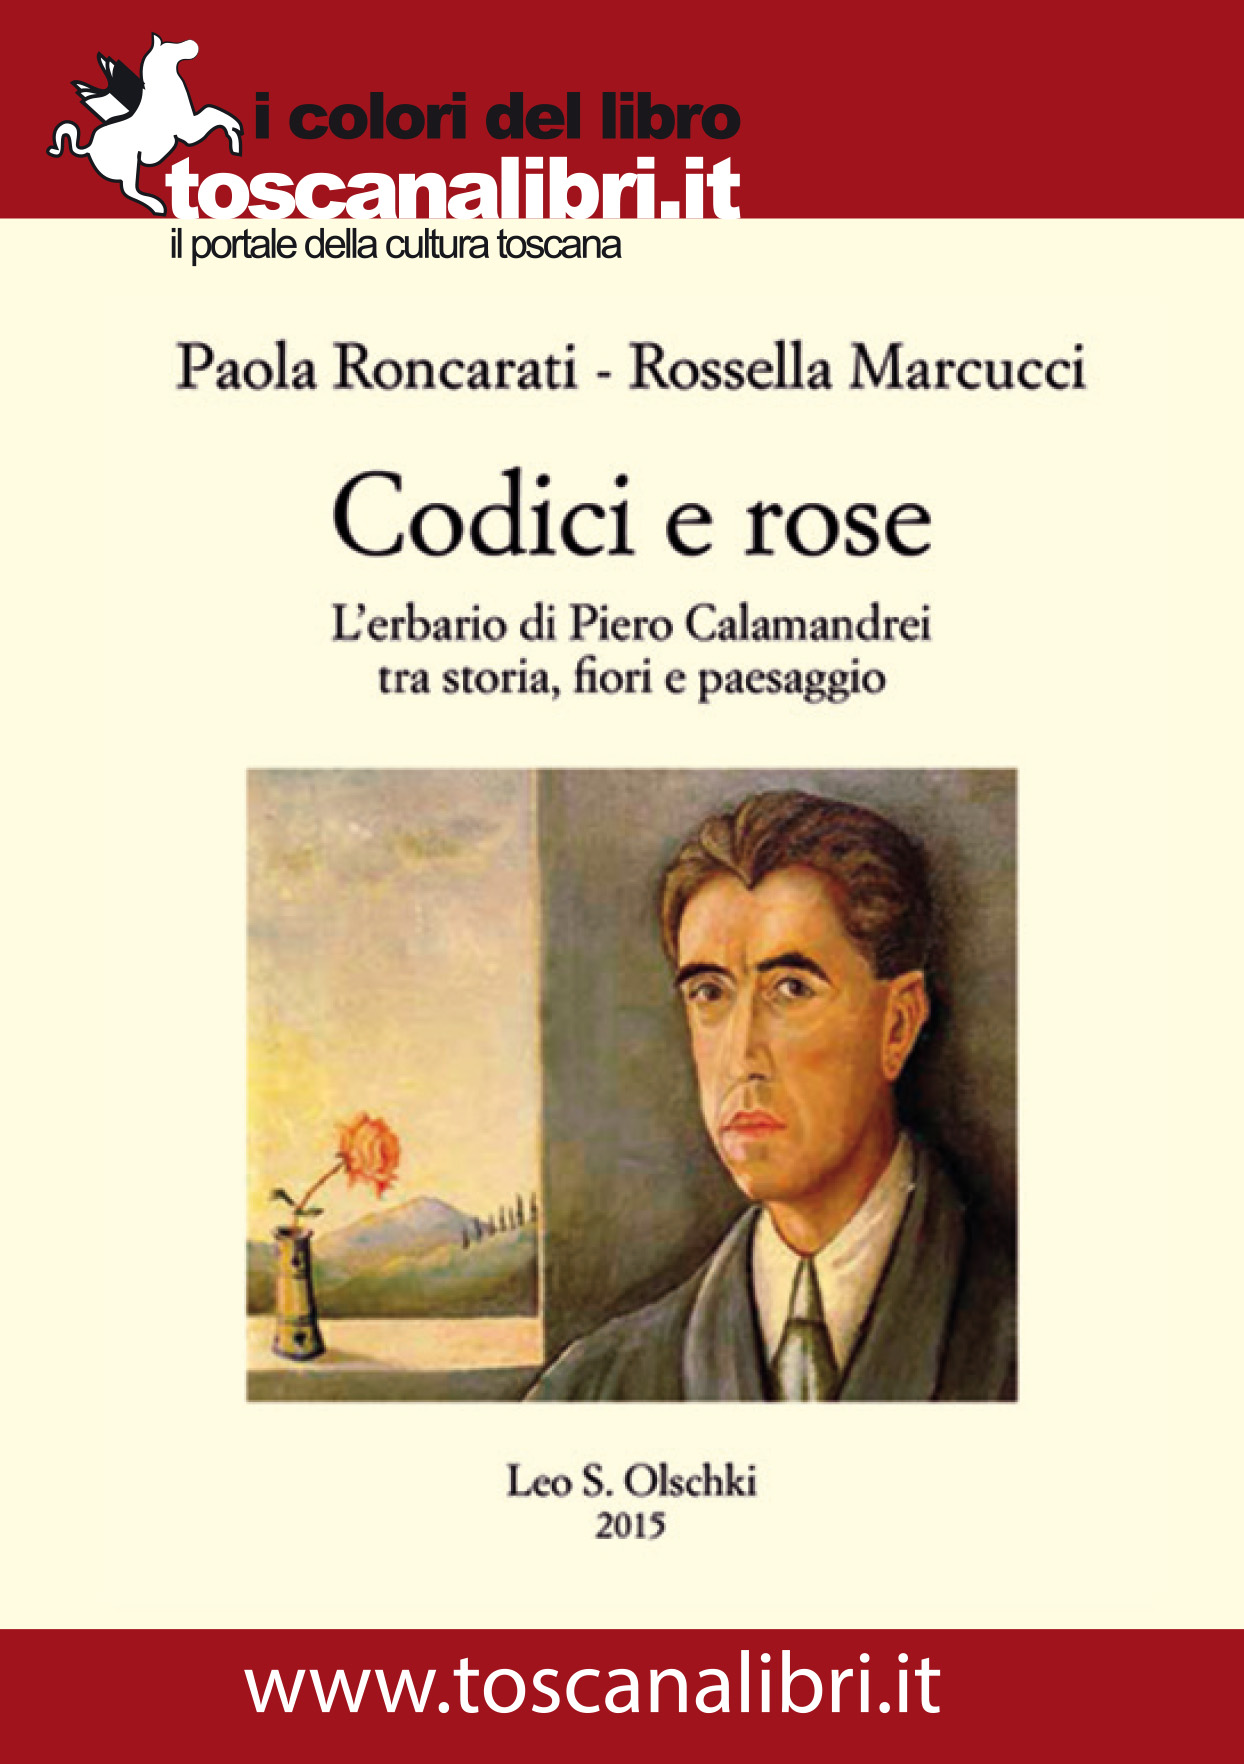 Toscanalibri 2015 Cartolina Roncarati Marcucci04_12_2015HIGH